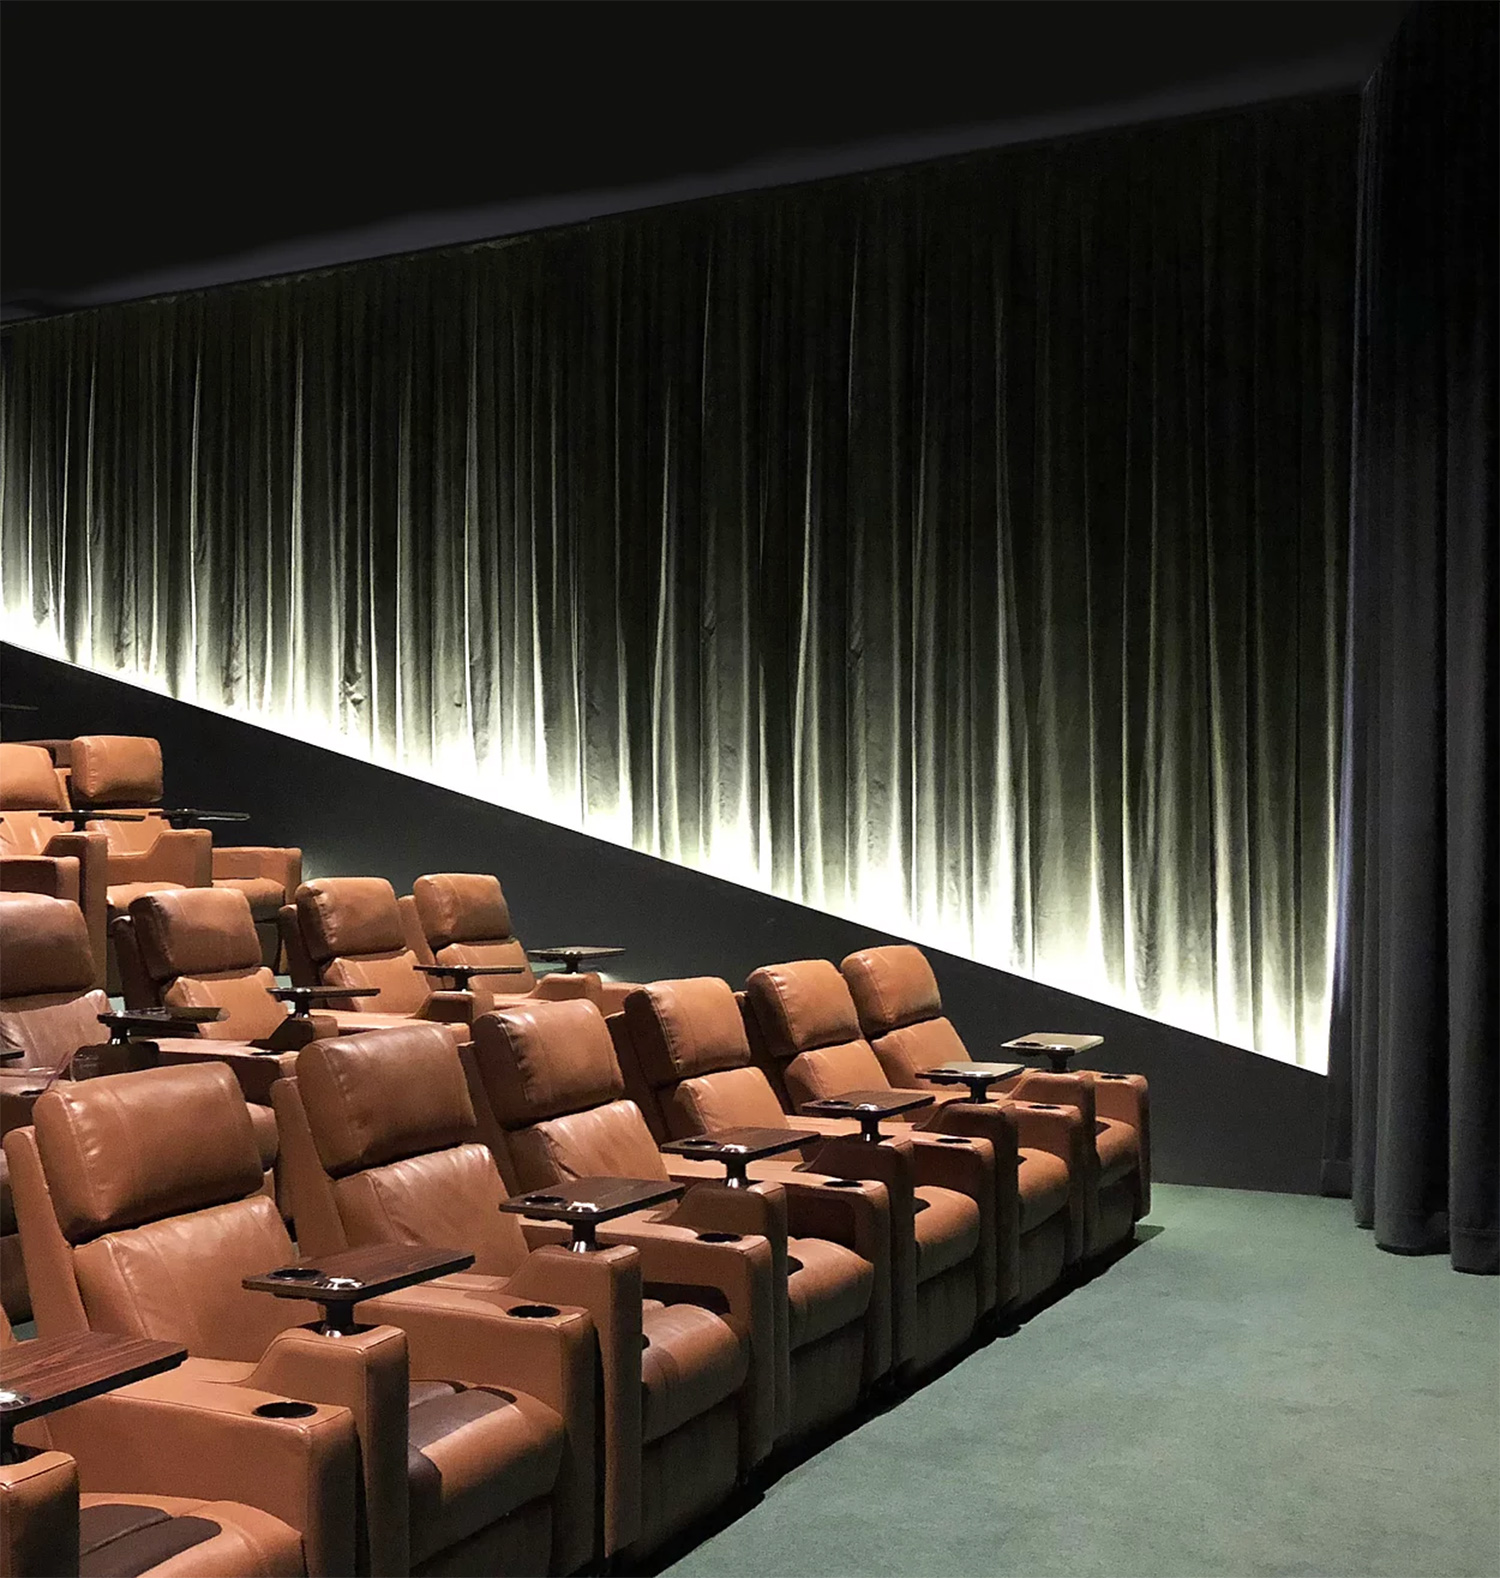 Federation Cinema, Corowa, designed by Regional Design Service.